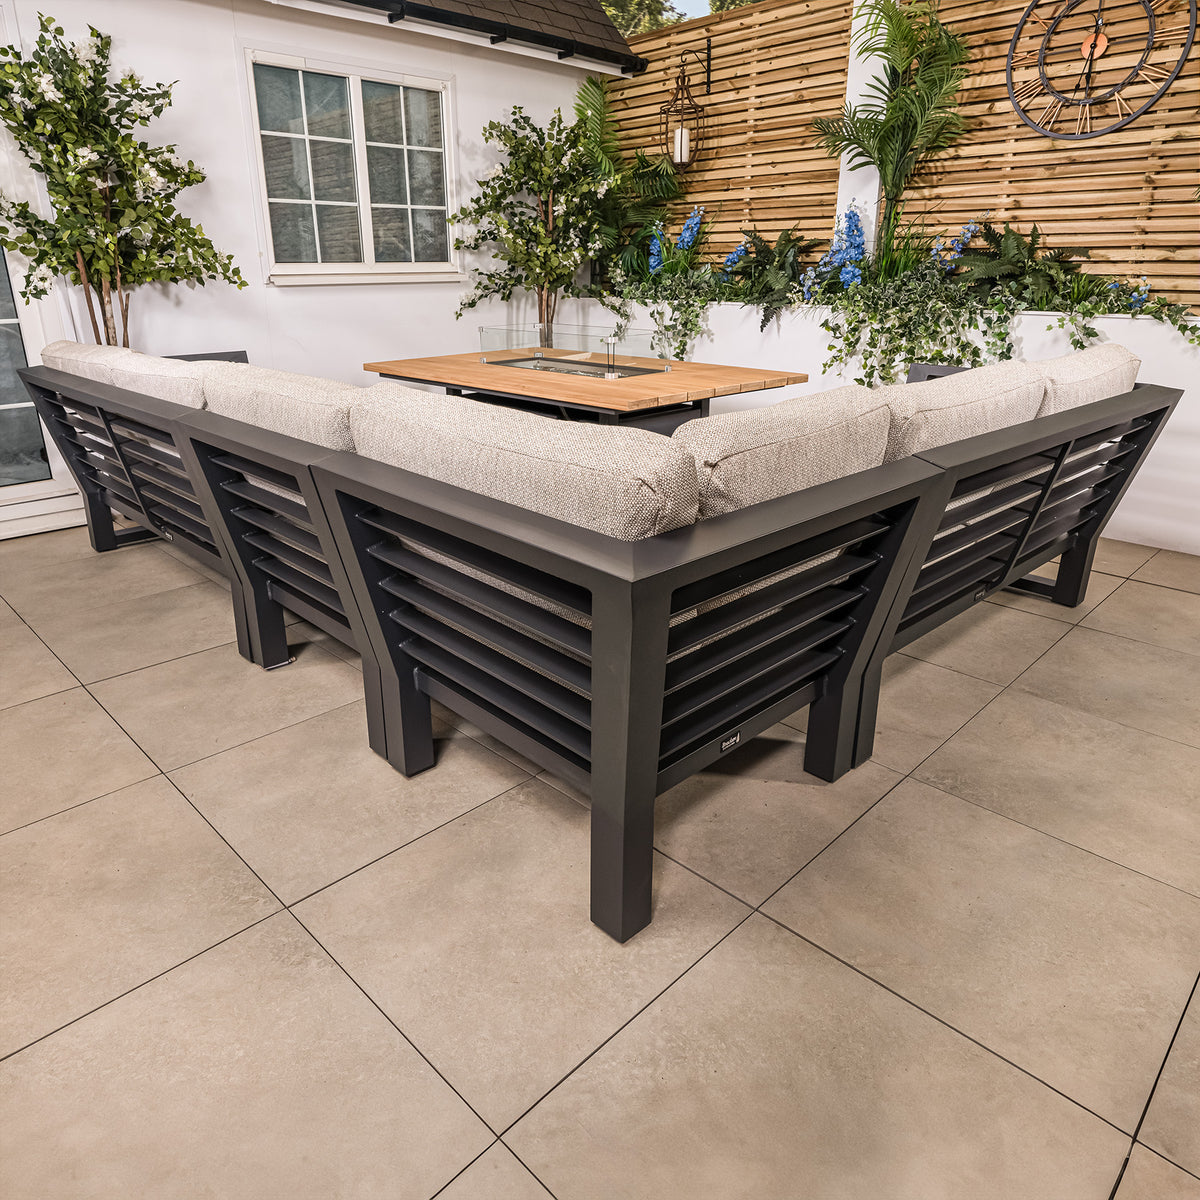 Bracken Outdoors Seattle Aluminium Lounge Corner Garden Furniture Set with Fire Pit Table